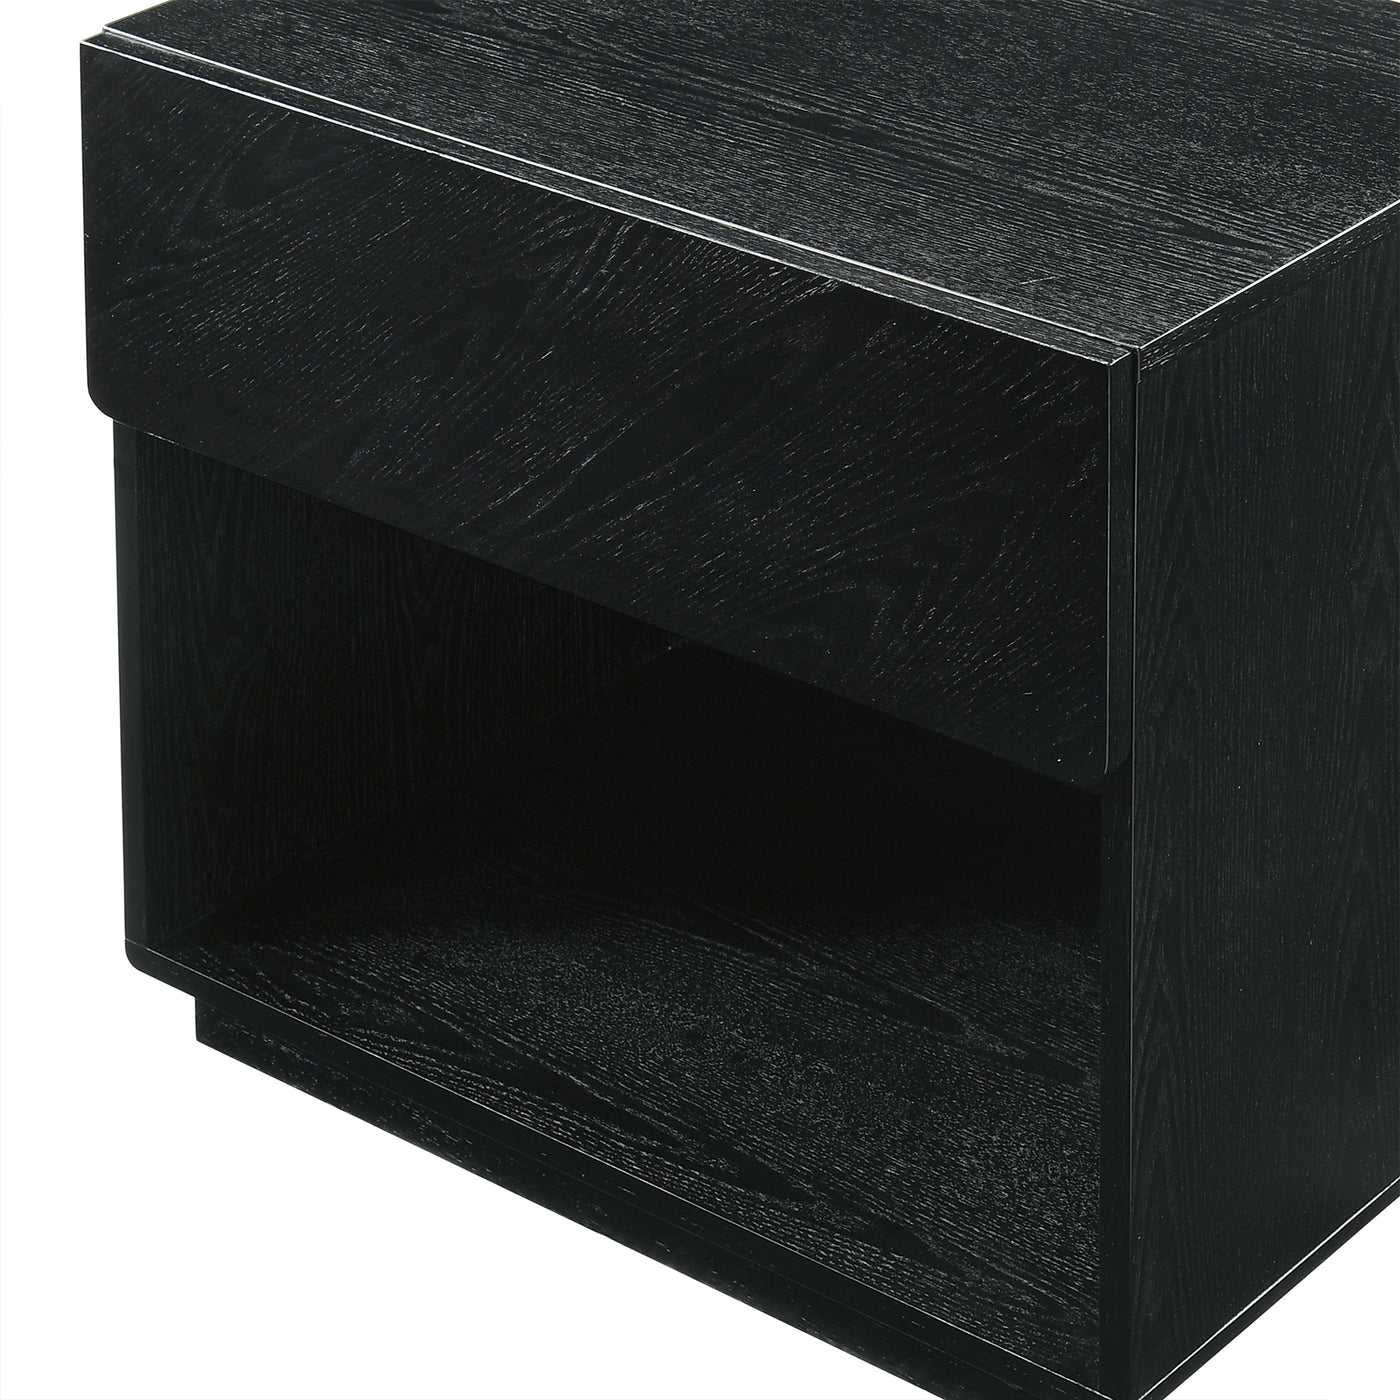 Petra 1 Drawer Wood Nightstand in Black Finish